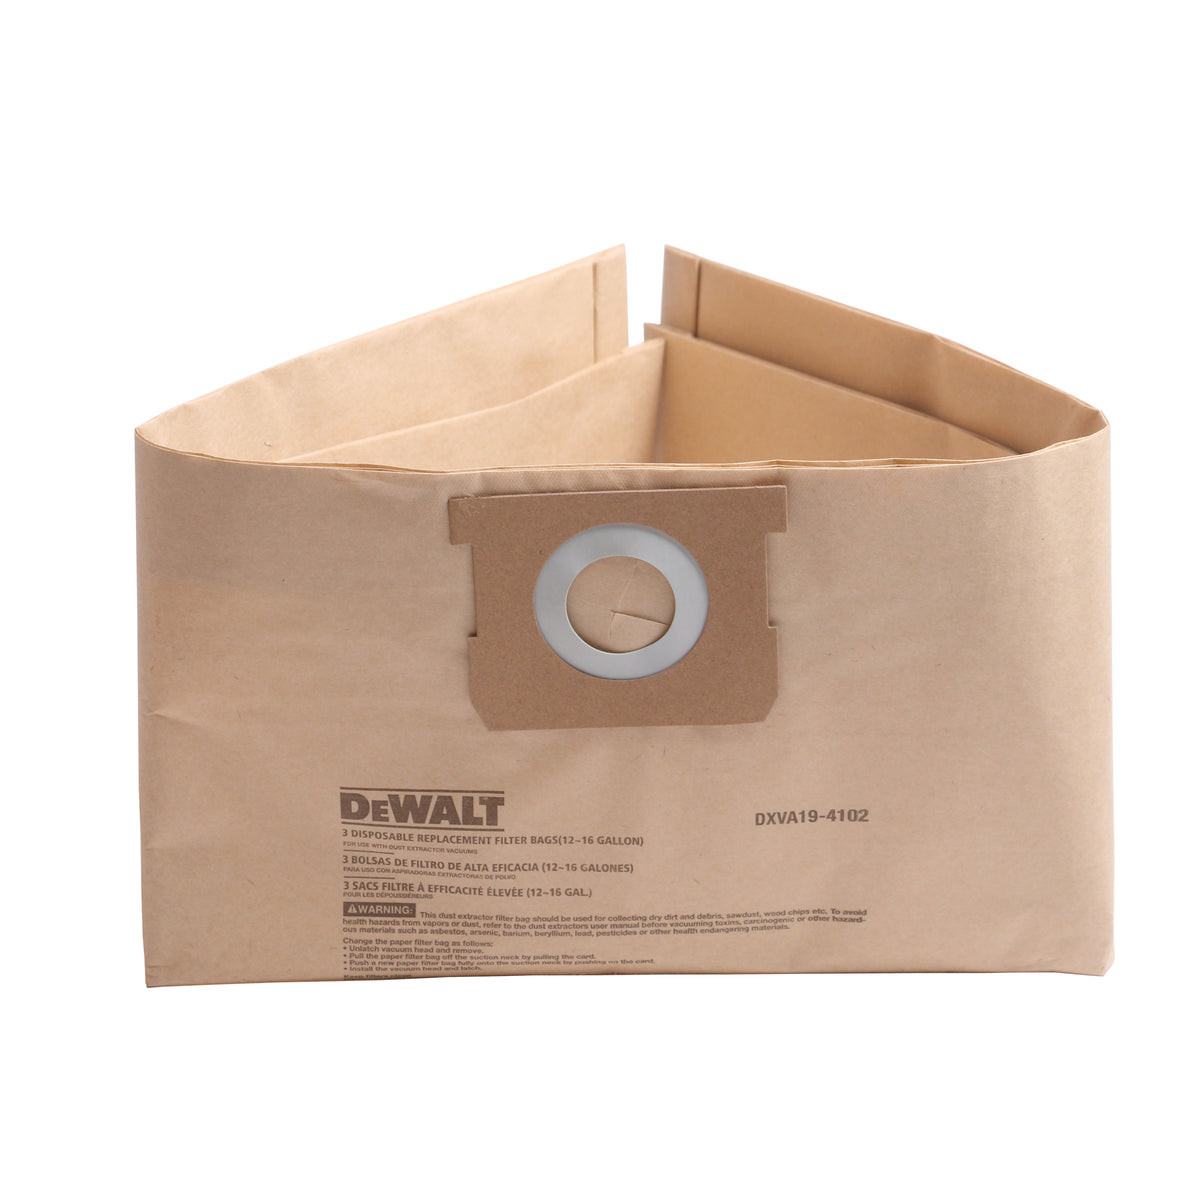 DXVA19-4102 DeWALT Dust Bag 12-16 gallon